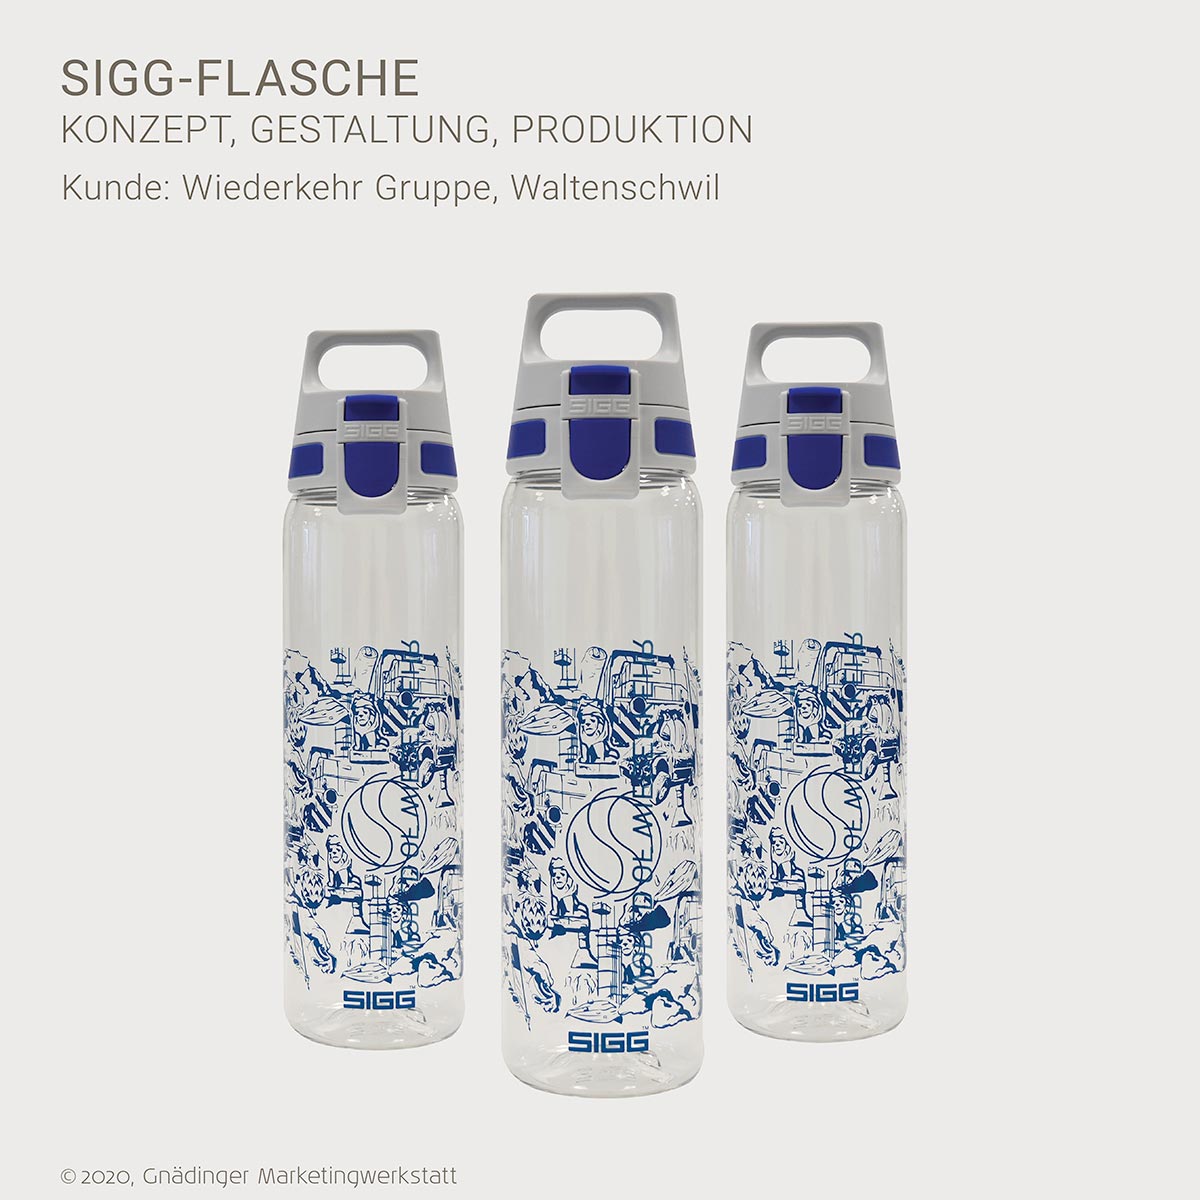 WEB1_GMW_Projekt_Wiederkehr-Recycling_Sigg-Flasche_11-2020